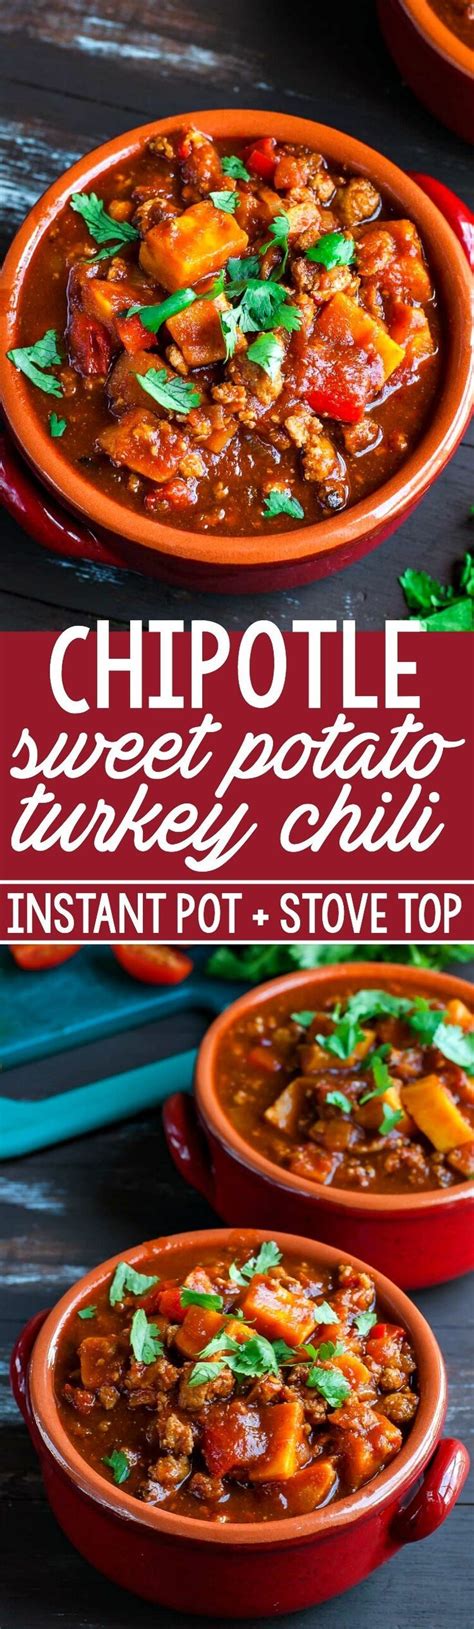 Smoky Chipotle Turkey And Sweet Potato Chili Instant Pot Stove Top